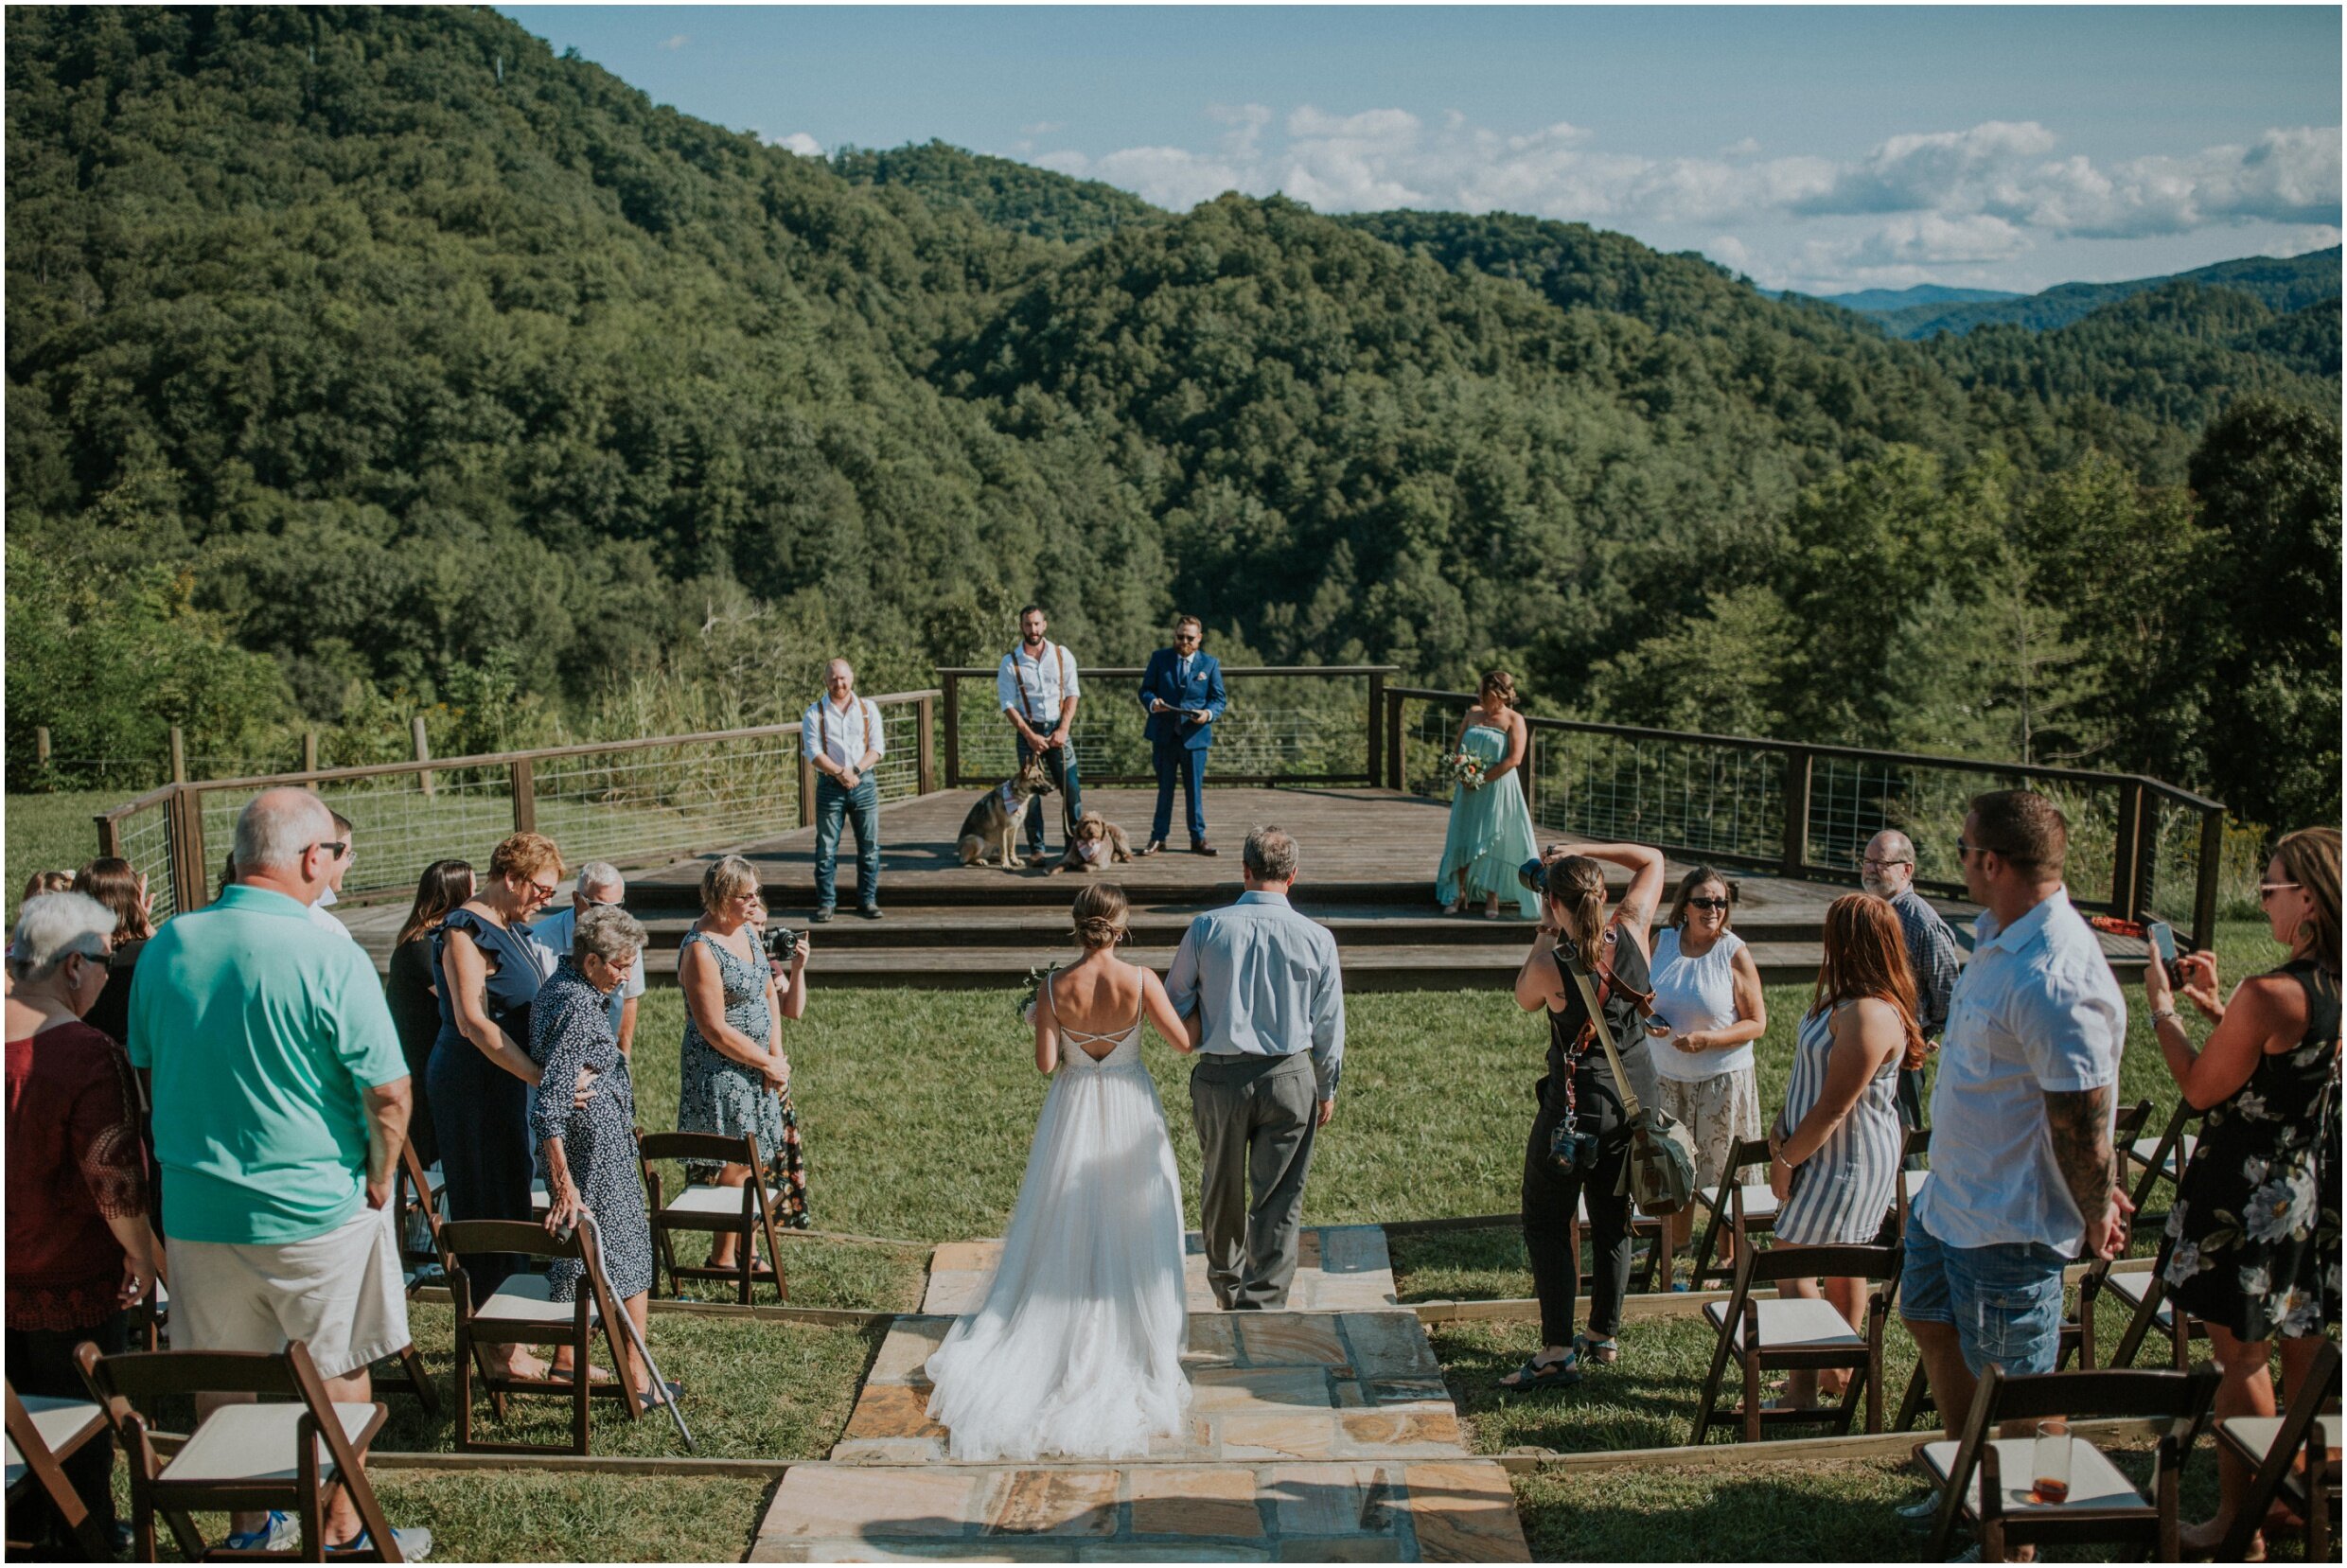 sugar-hollow-retreat-butler-tennessee-outdoor-wedding-venue-mountain-weekend-getaway-summer-rustic-wedding-katy-sergent_0091.jpg